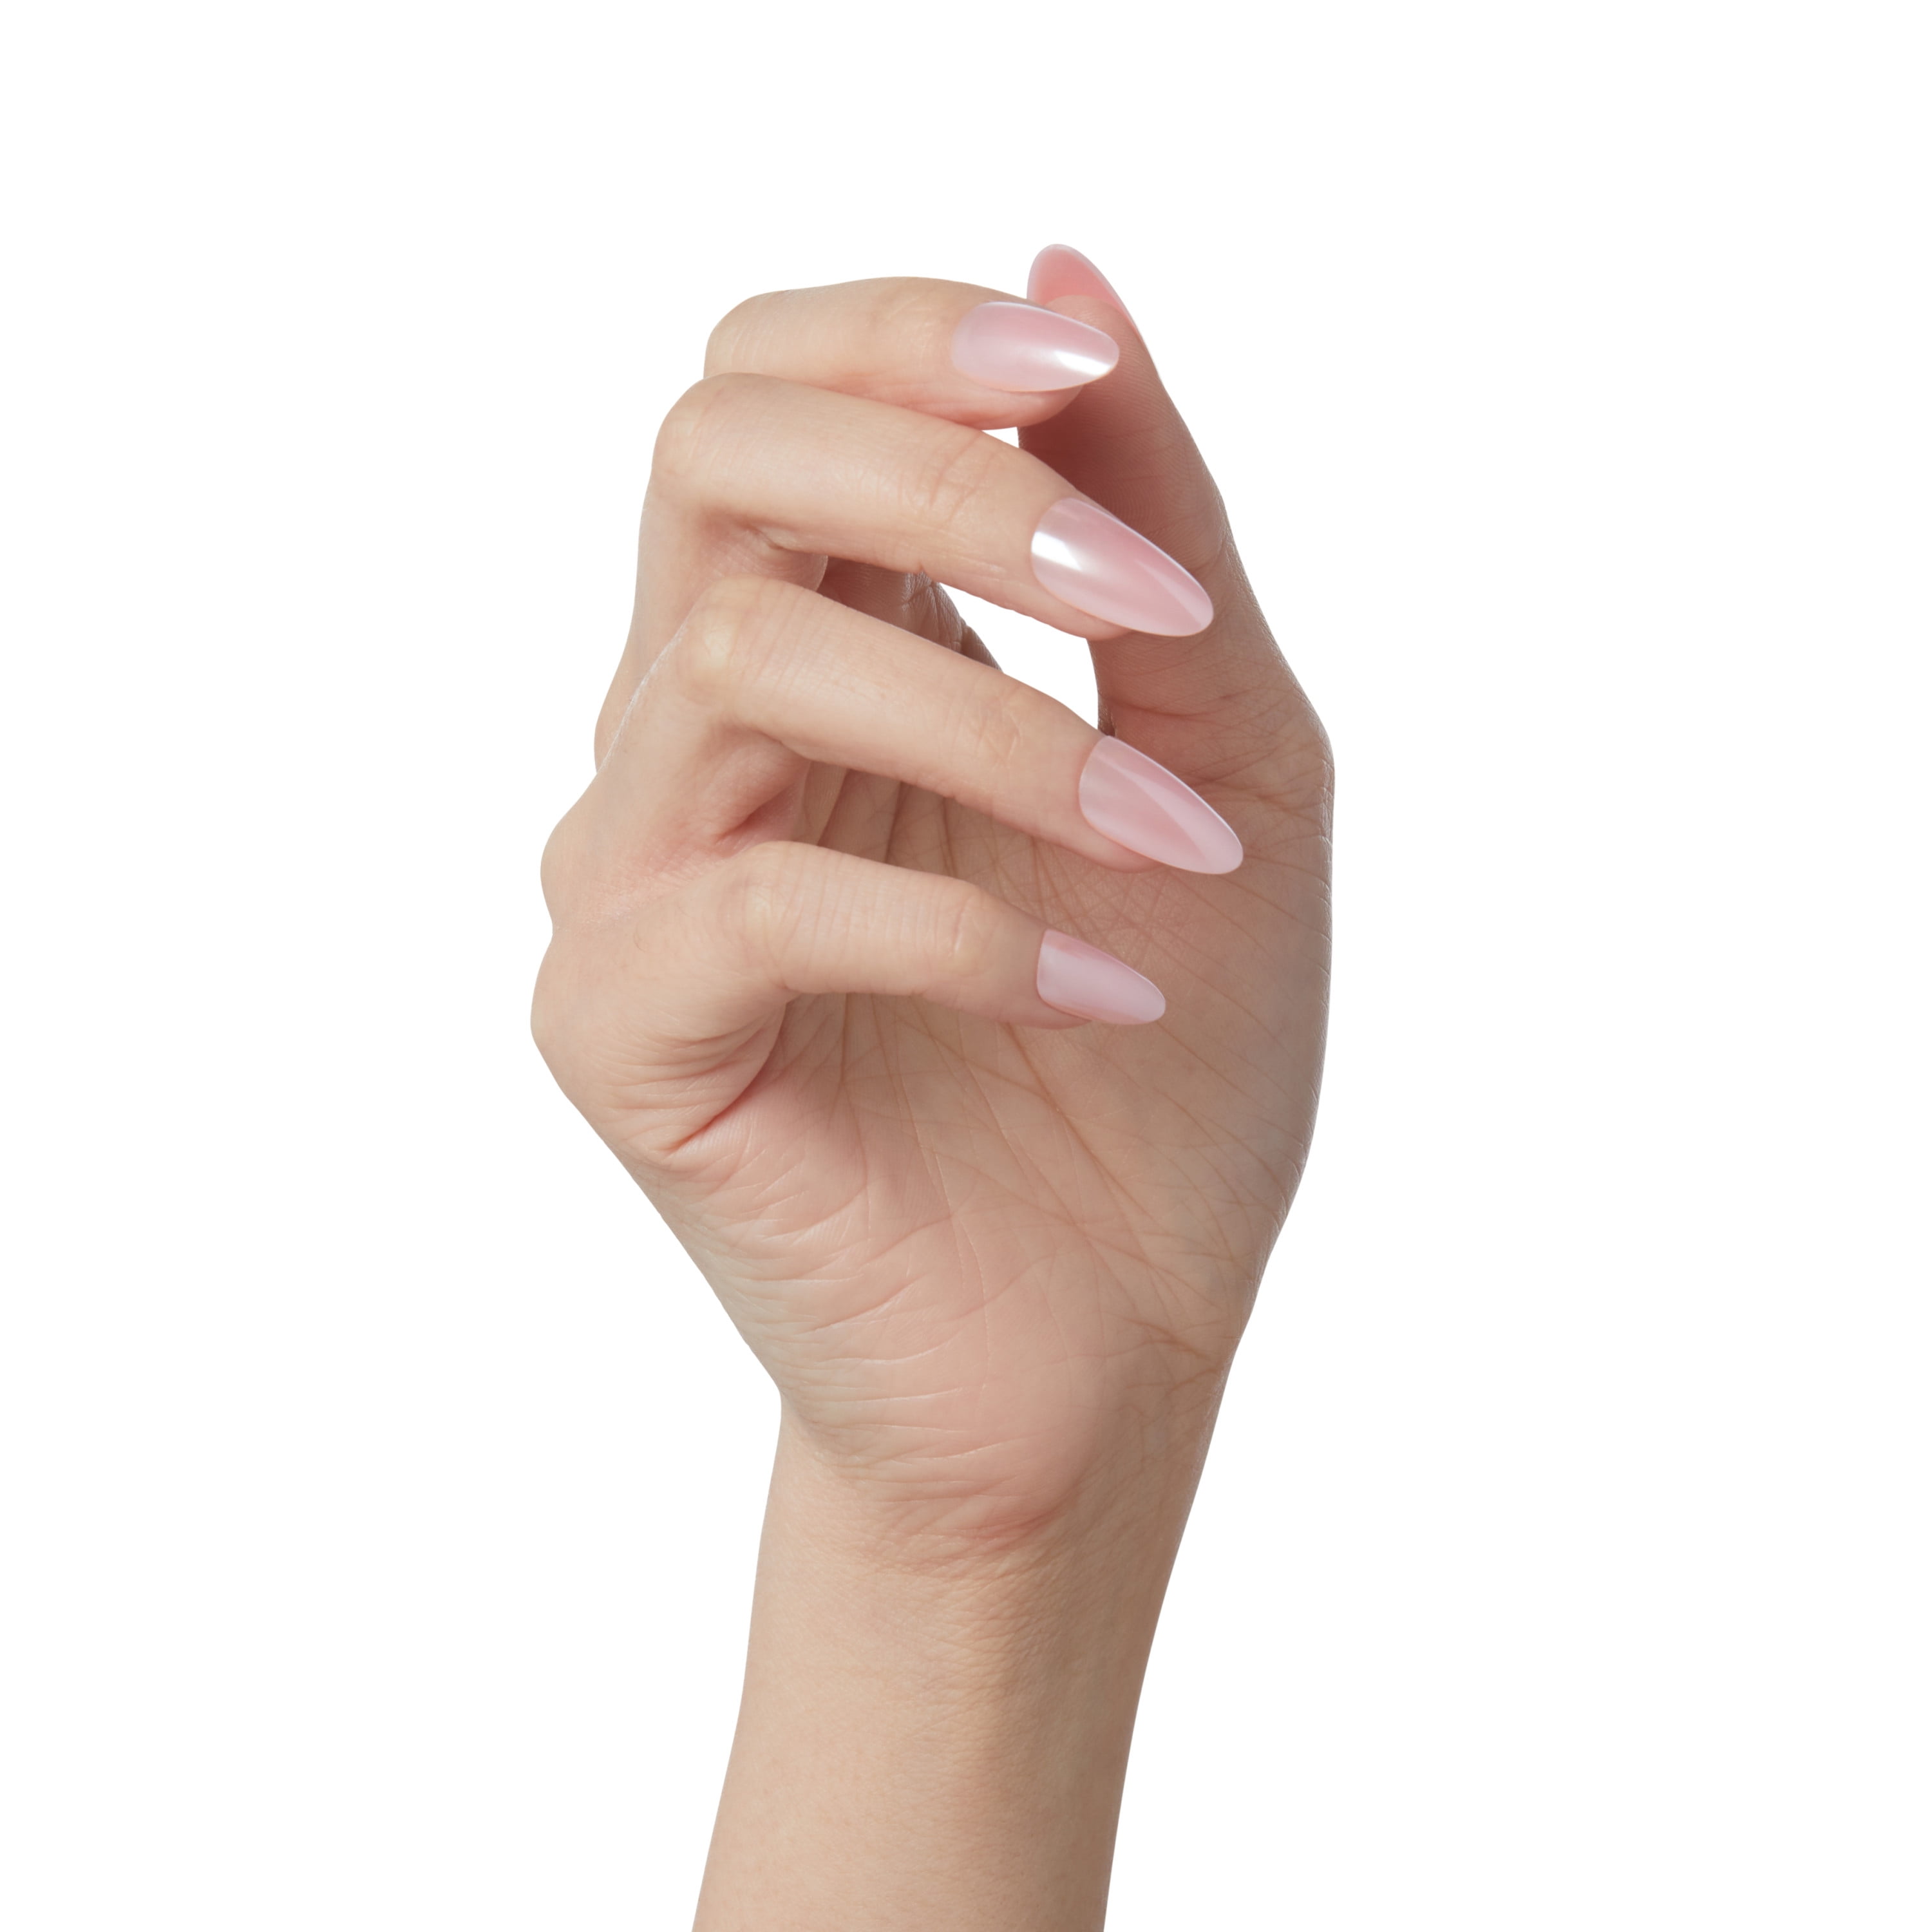 Short Length Press on Nails Artificial Acrylic Fake Nails for Women 24PCS  Full Cover Reusable False Nails Kits Gold and Brown Nails Design Glue on Nails  Fake Nails for Nail Art